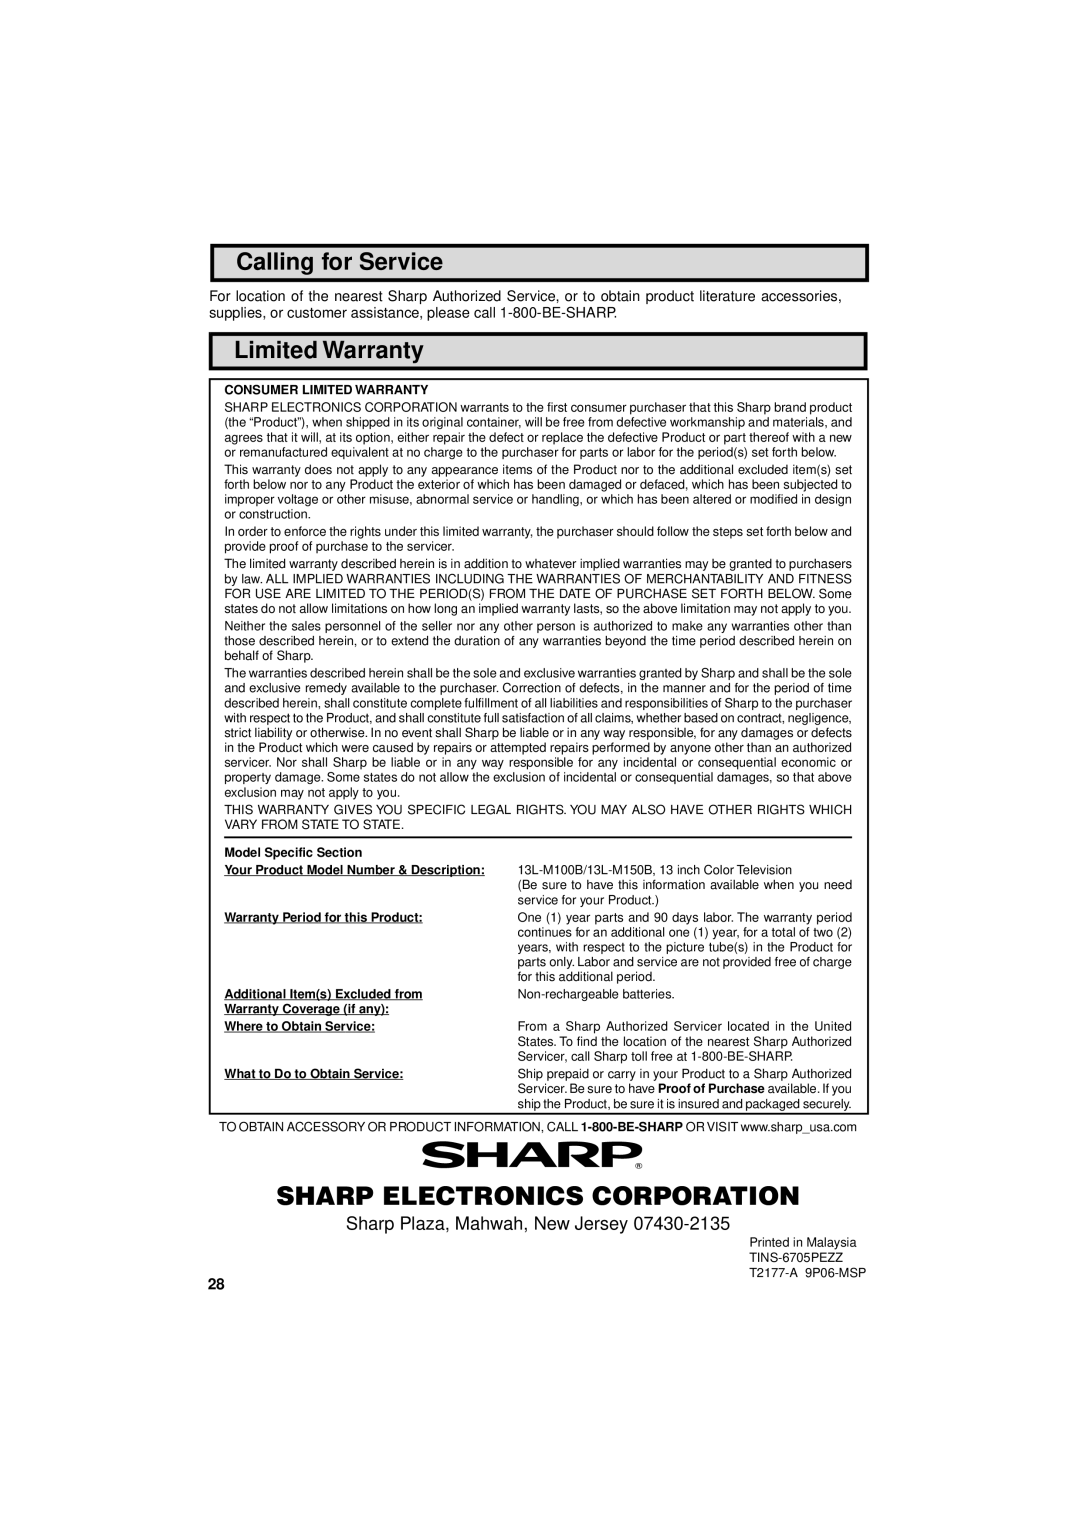 Sharp 13L-M100B Sharp Electronics Corporation, Calling for Service, Limited Warranty, Sharp Plaza, Mahwah, New Jersey 